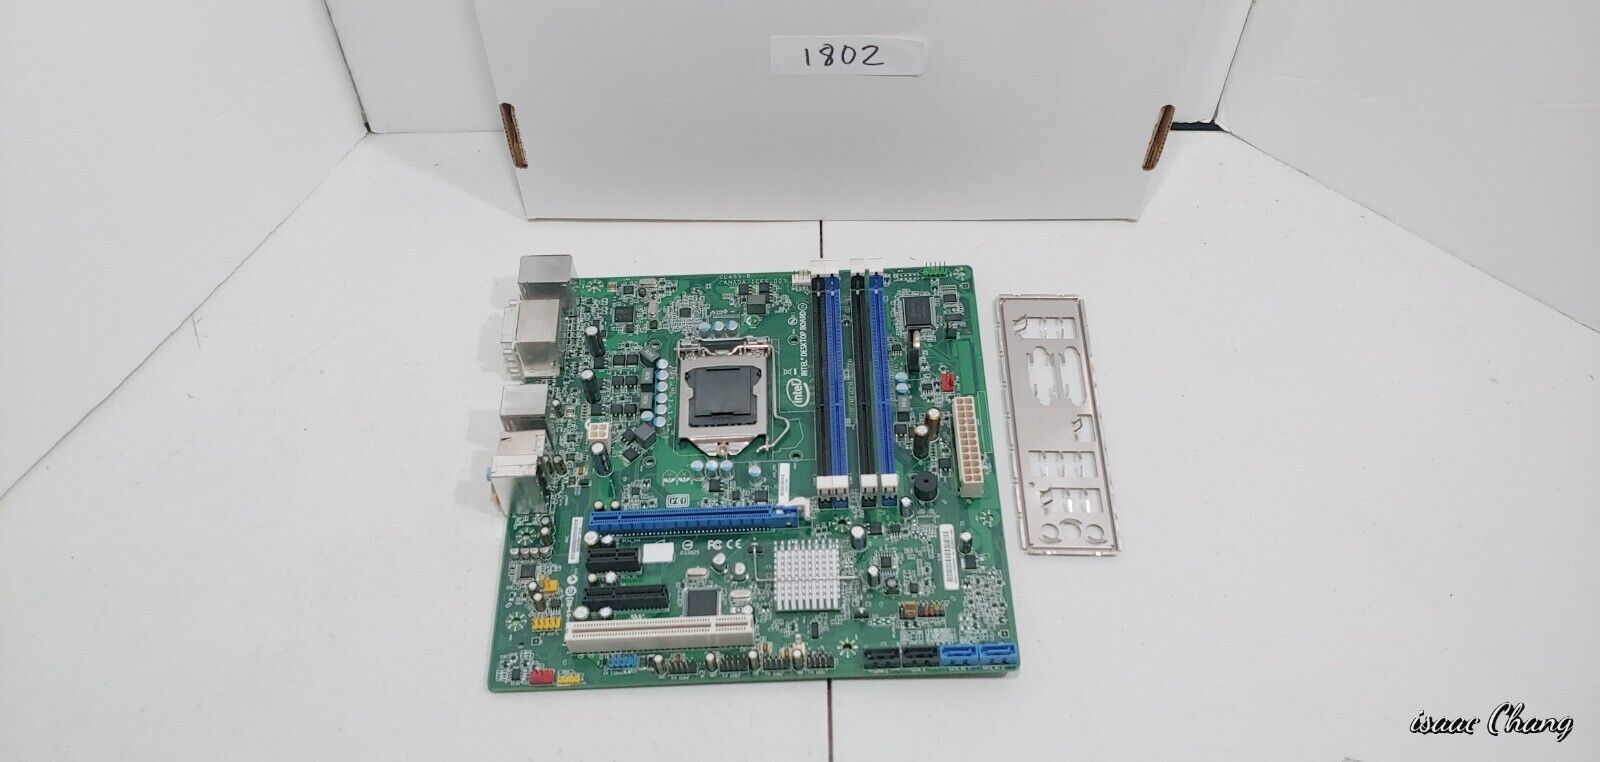 Intel DQ67SW Socket LGA 1155 Q67 DDR3 Motherboard #1802